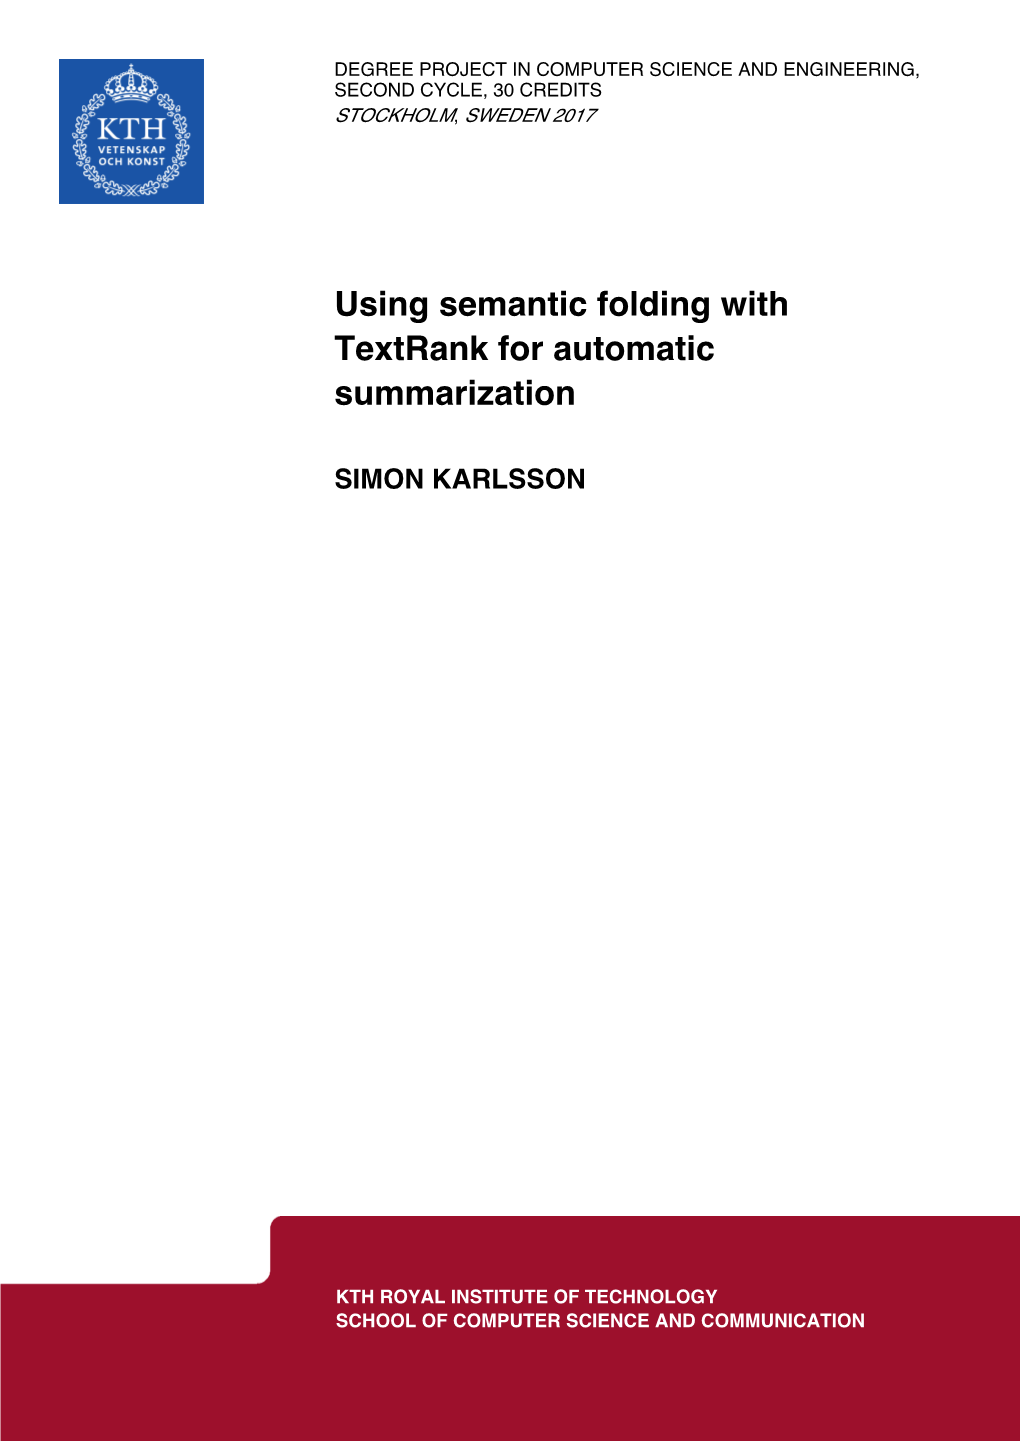 Using Semantic Folding with Textrank for Automatic Summarization